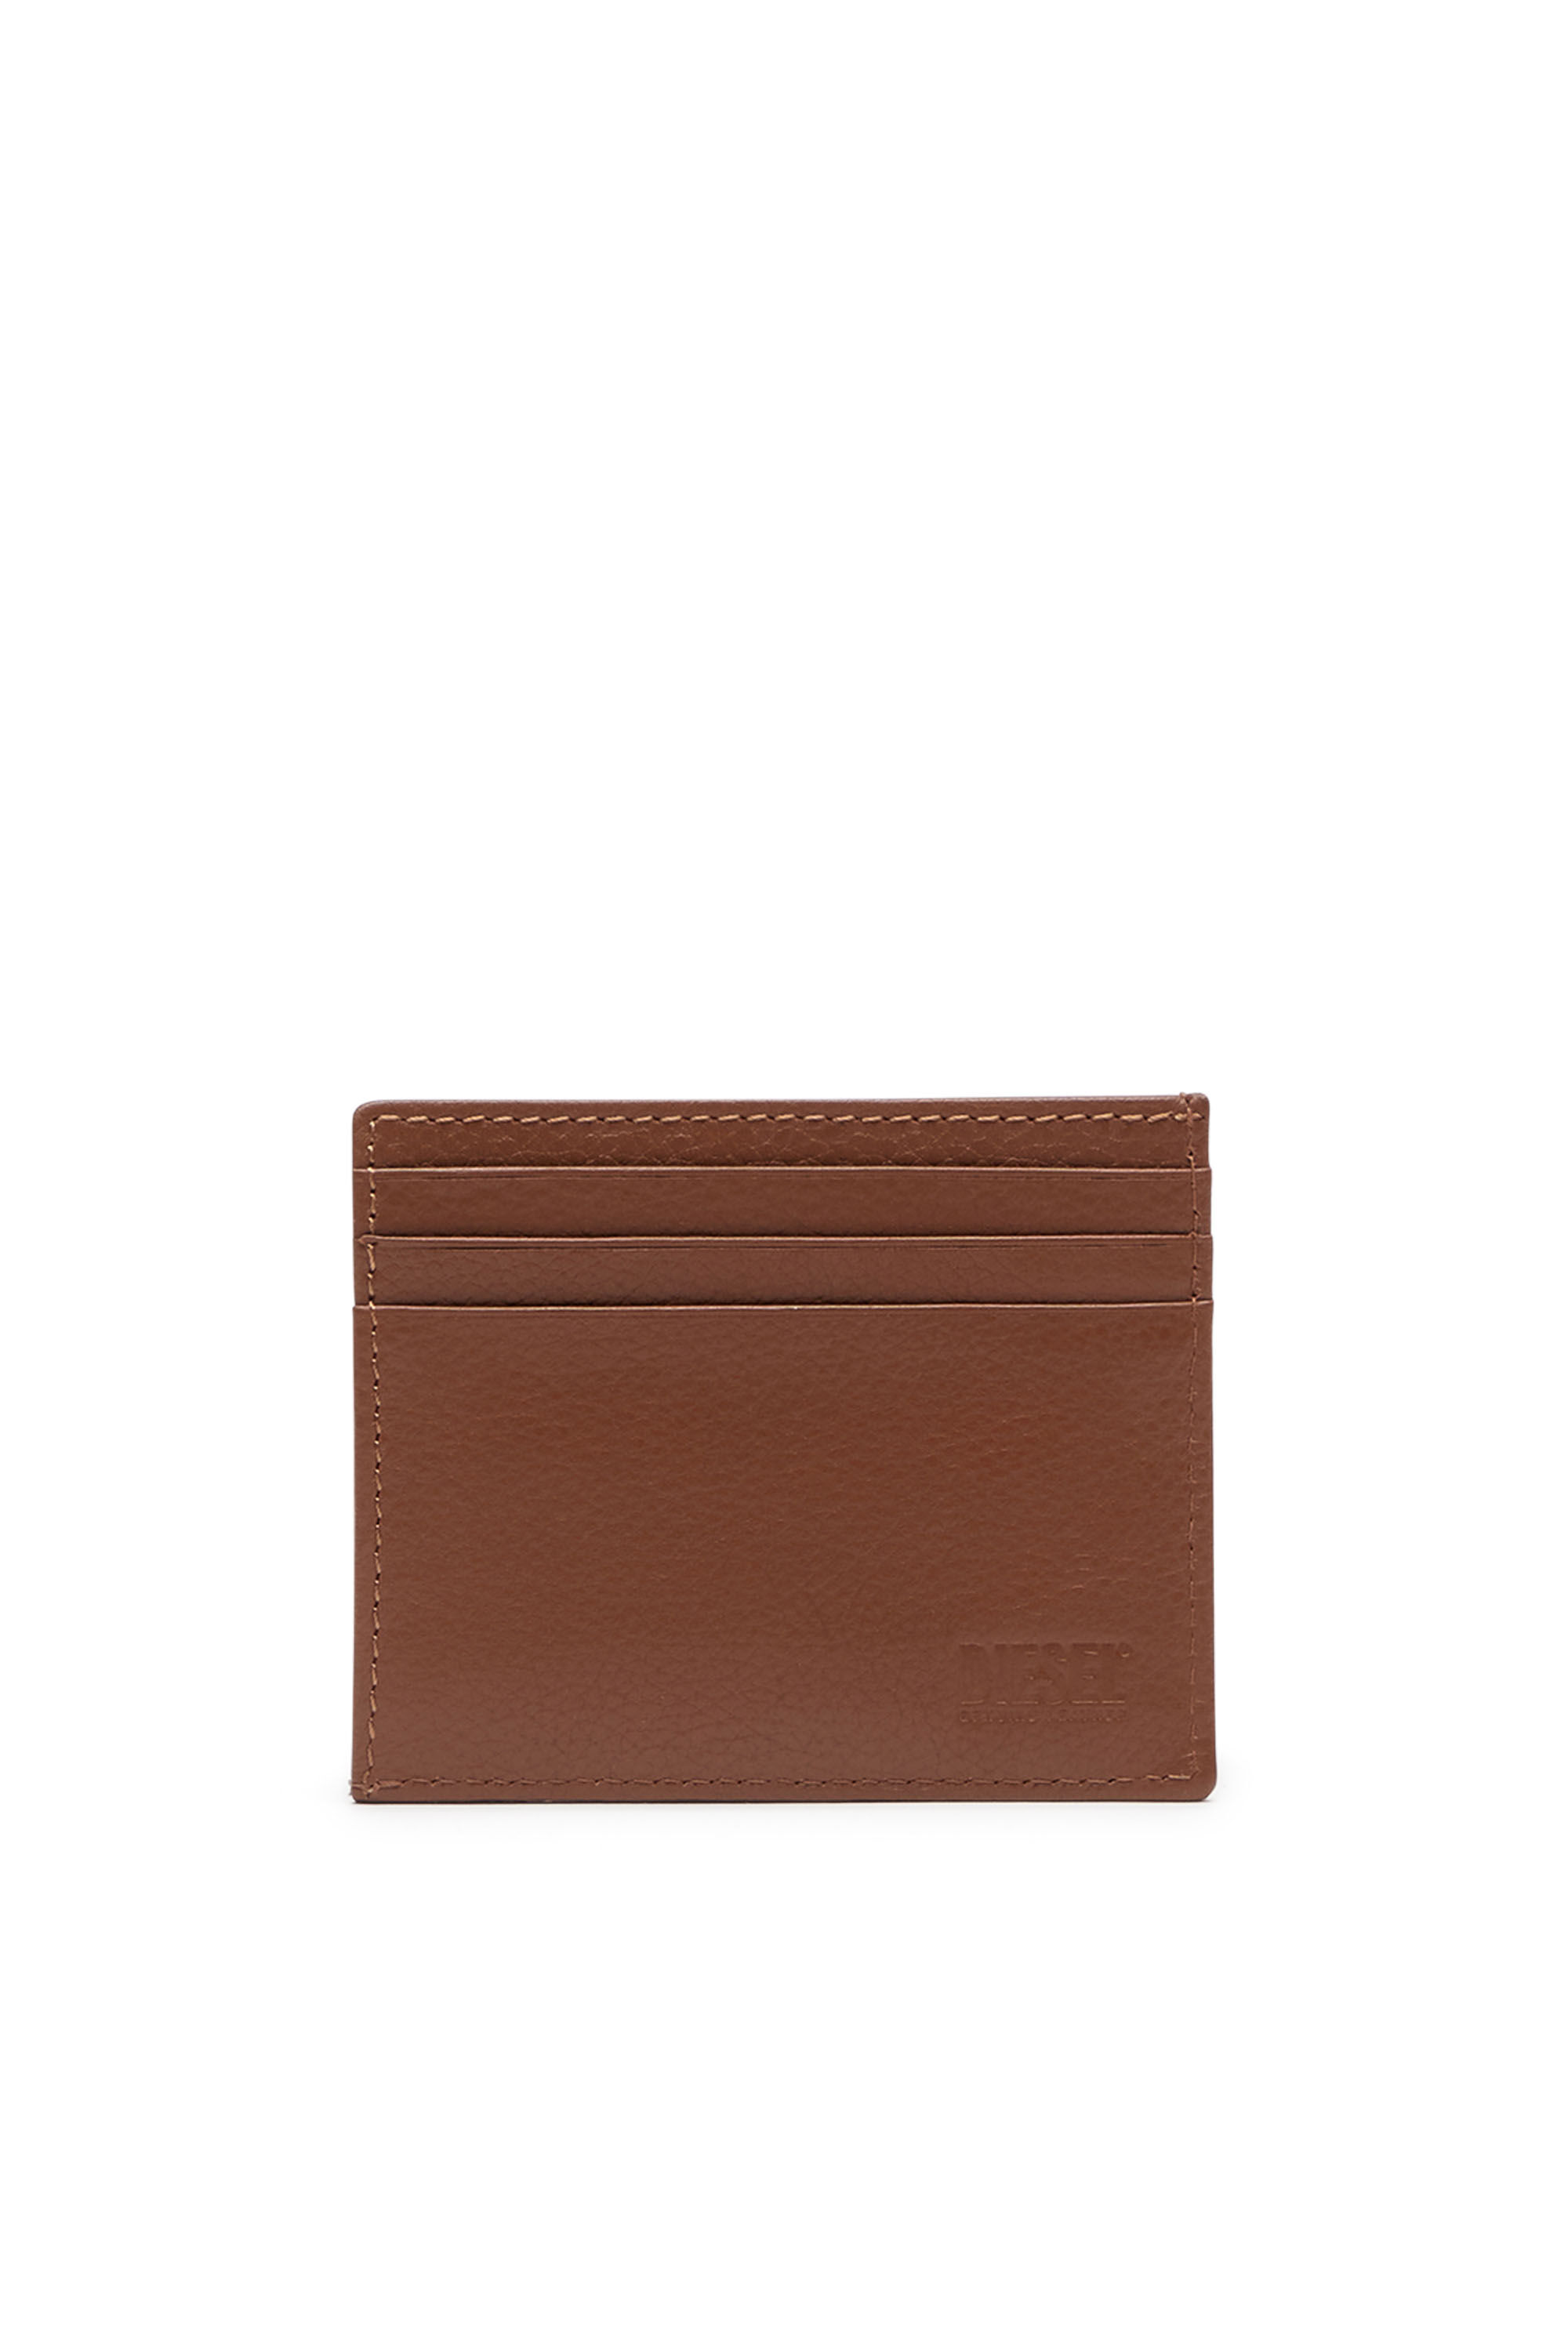 Diesel - MEDAL-D CARD HOLDER 6, Man Card holder in grainy leather in Brown - Image 2